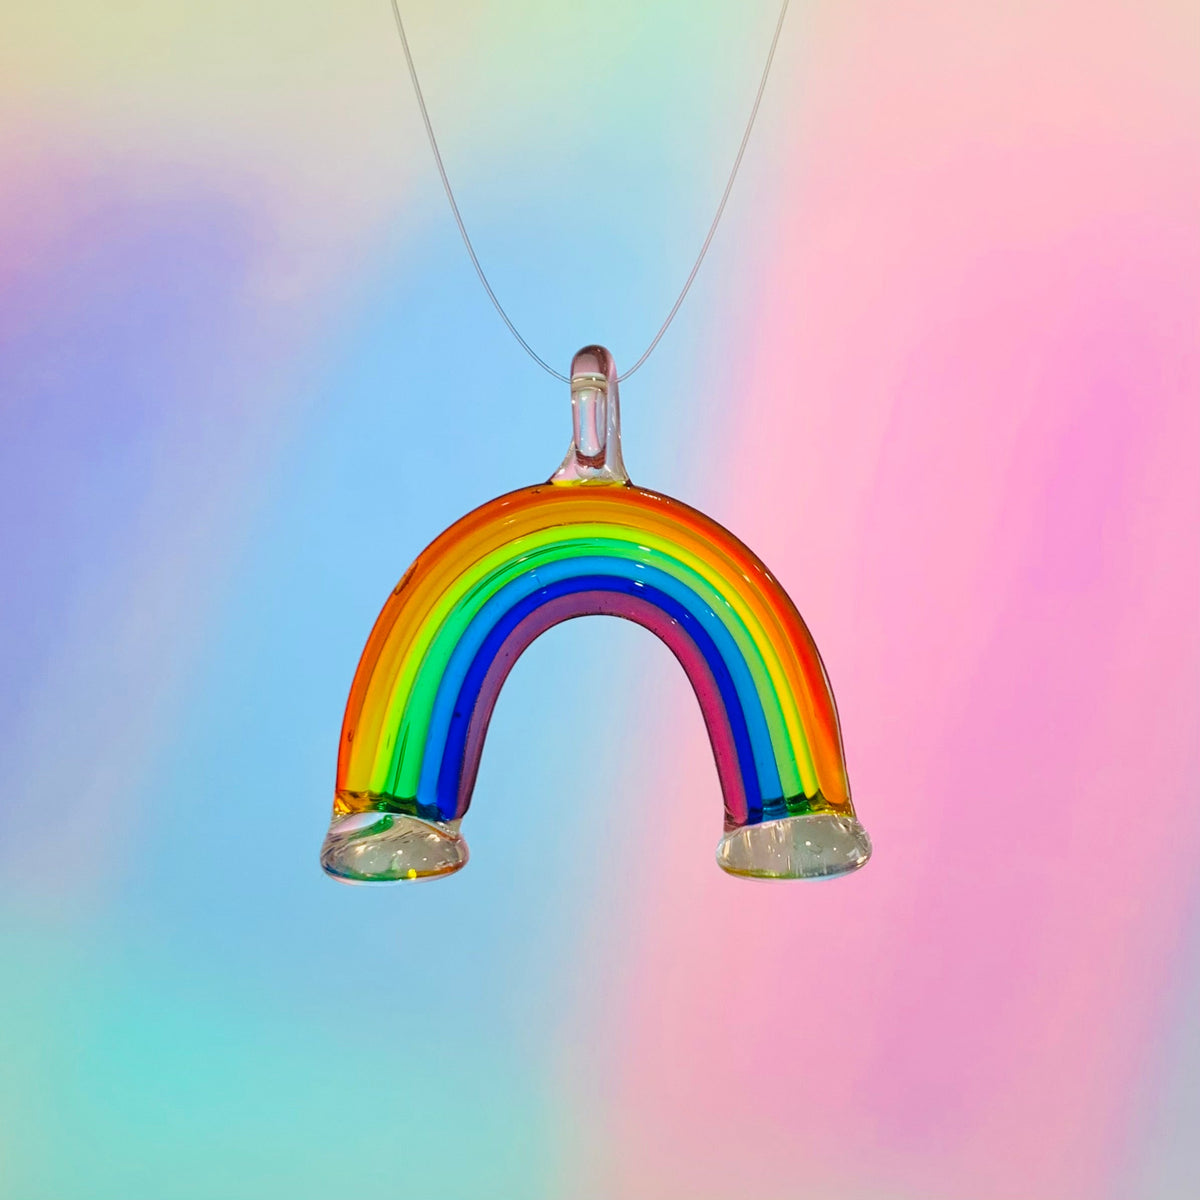 Hanging Rainbow Ornament Miniature - 